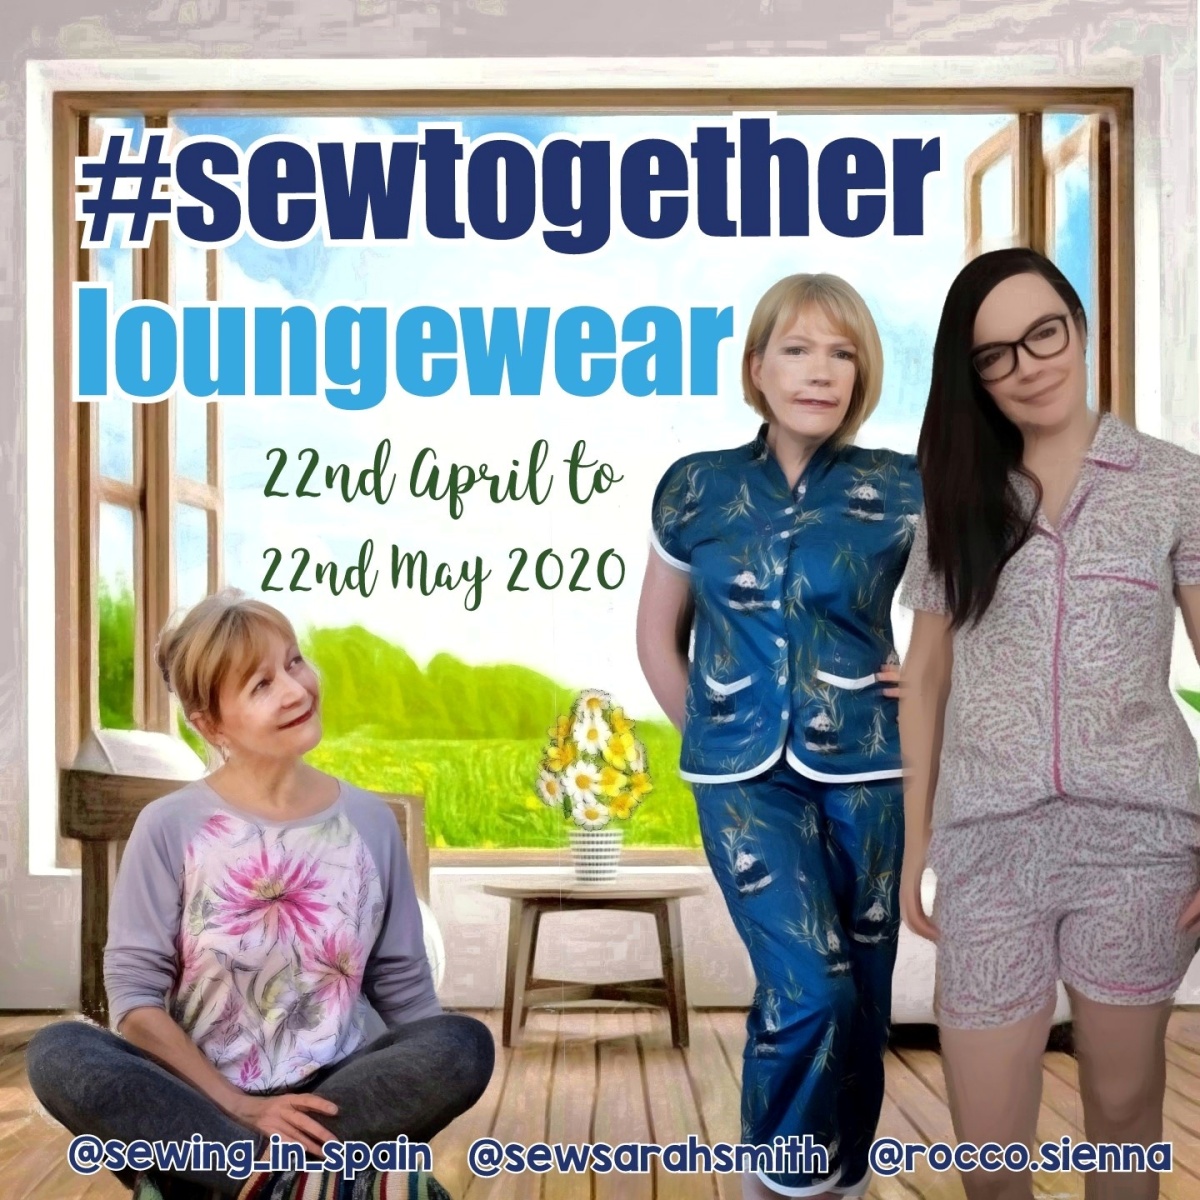 #SewTogetherForSummer 2020 Sewing Challenge now #SewTogetherLoungewear!